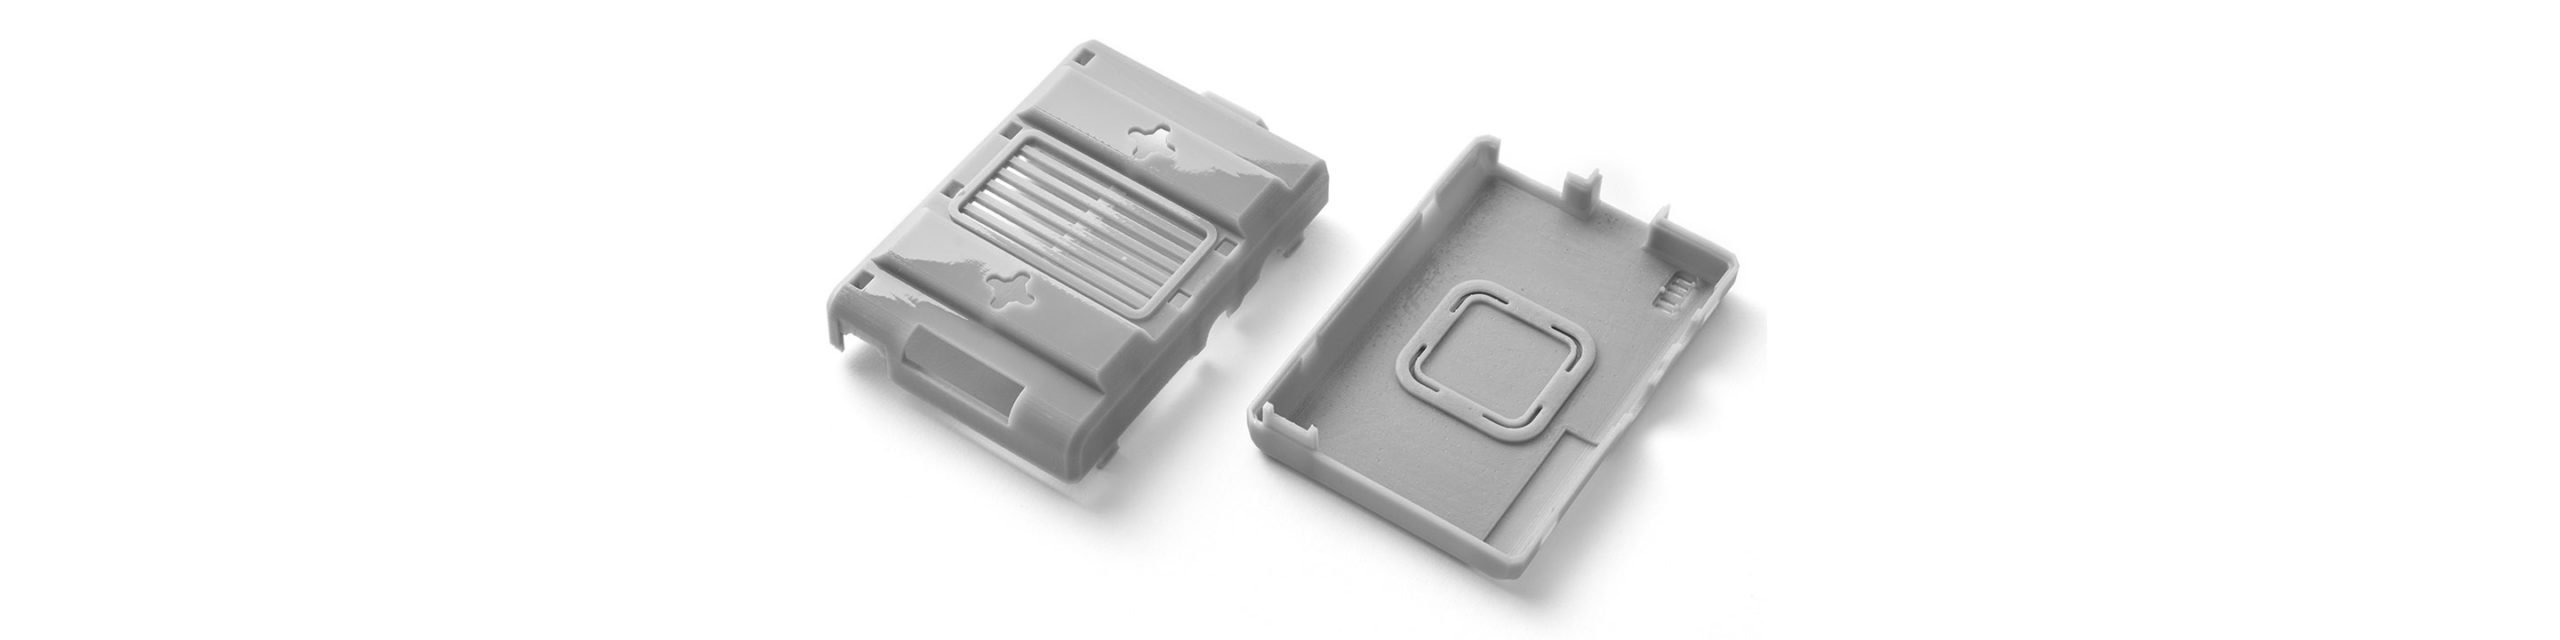 gray parts produced with SLA Accura Xtreme